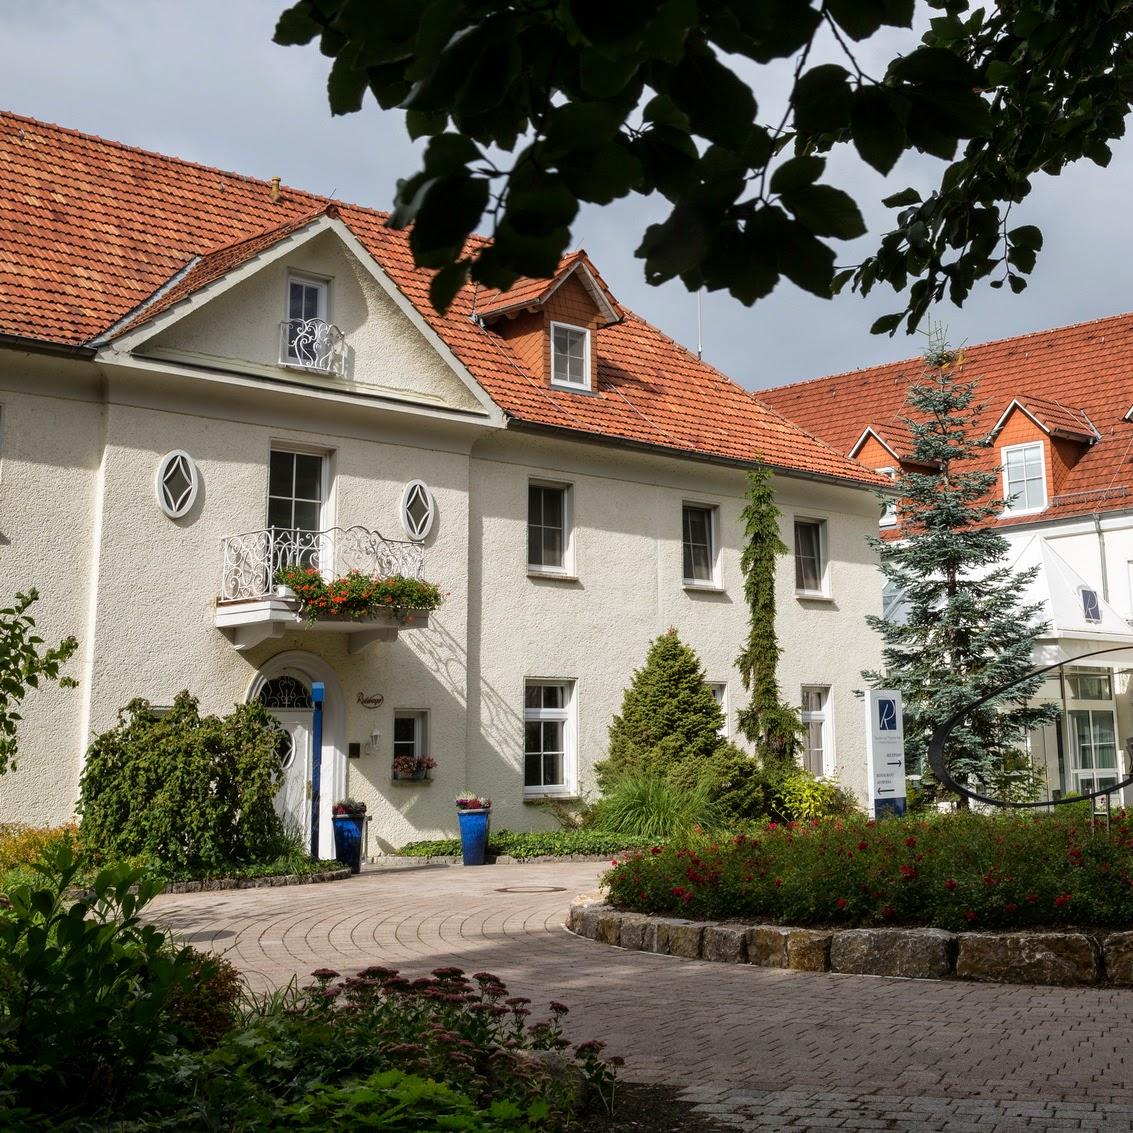 Restaurant "Hotel Residenz am Motzener See" in Mittenwalde OT Motzen